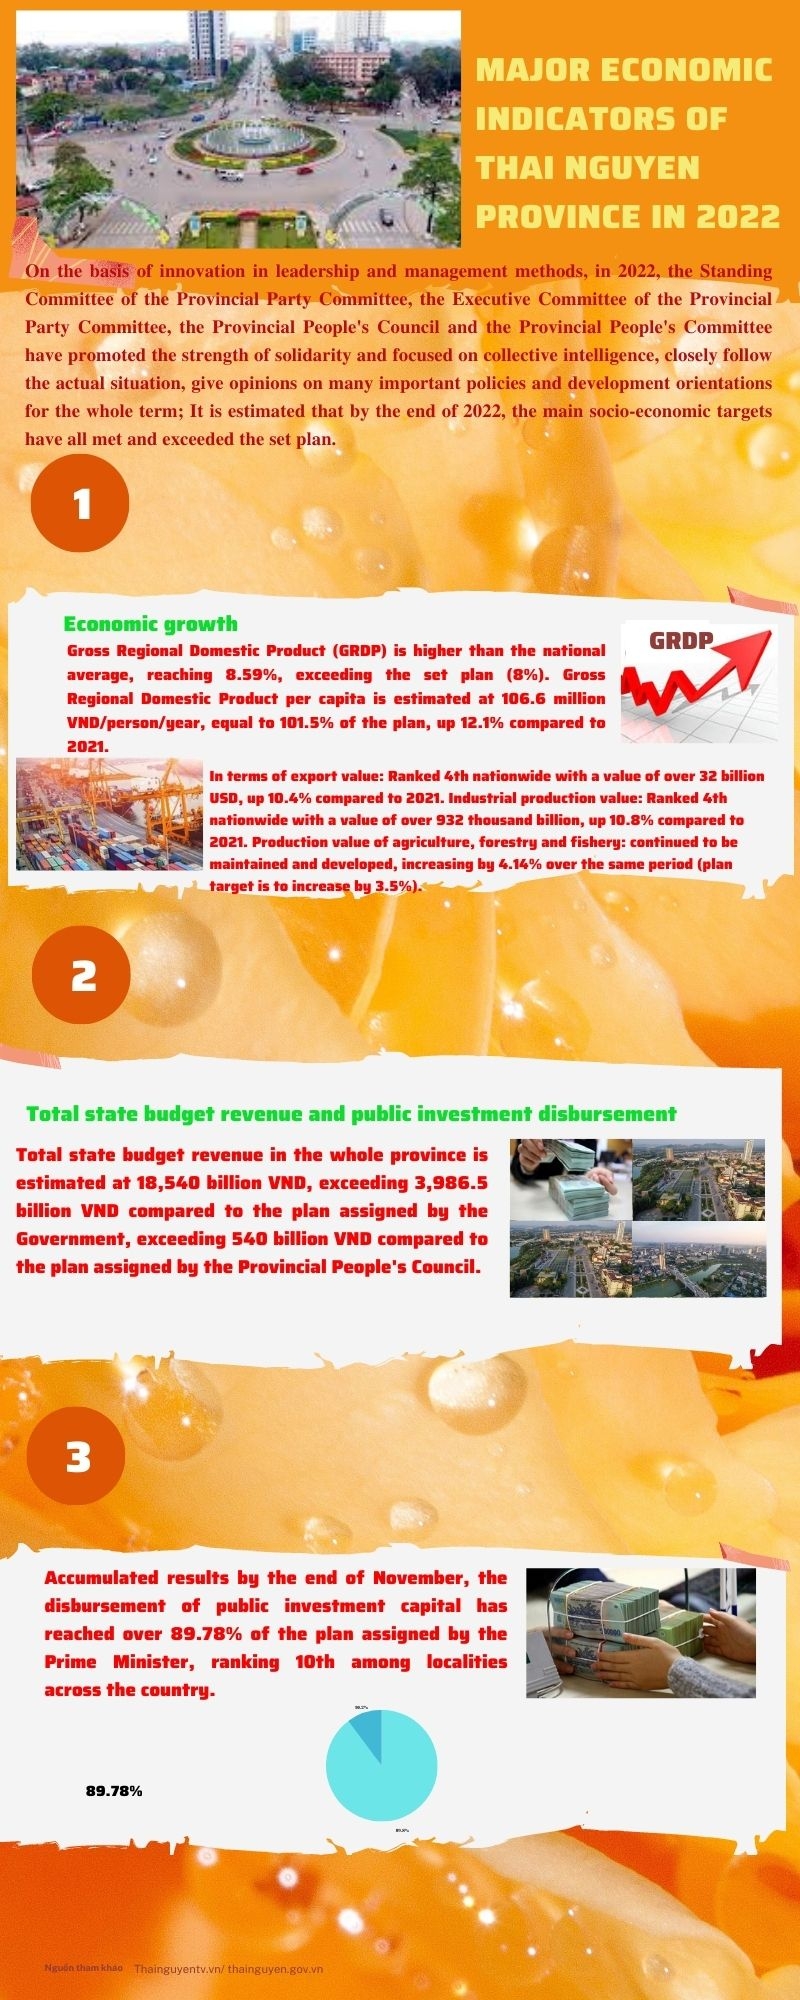 [Infographic] Major economic indicators of Thai Nguyen province in 2022